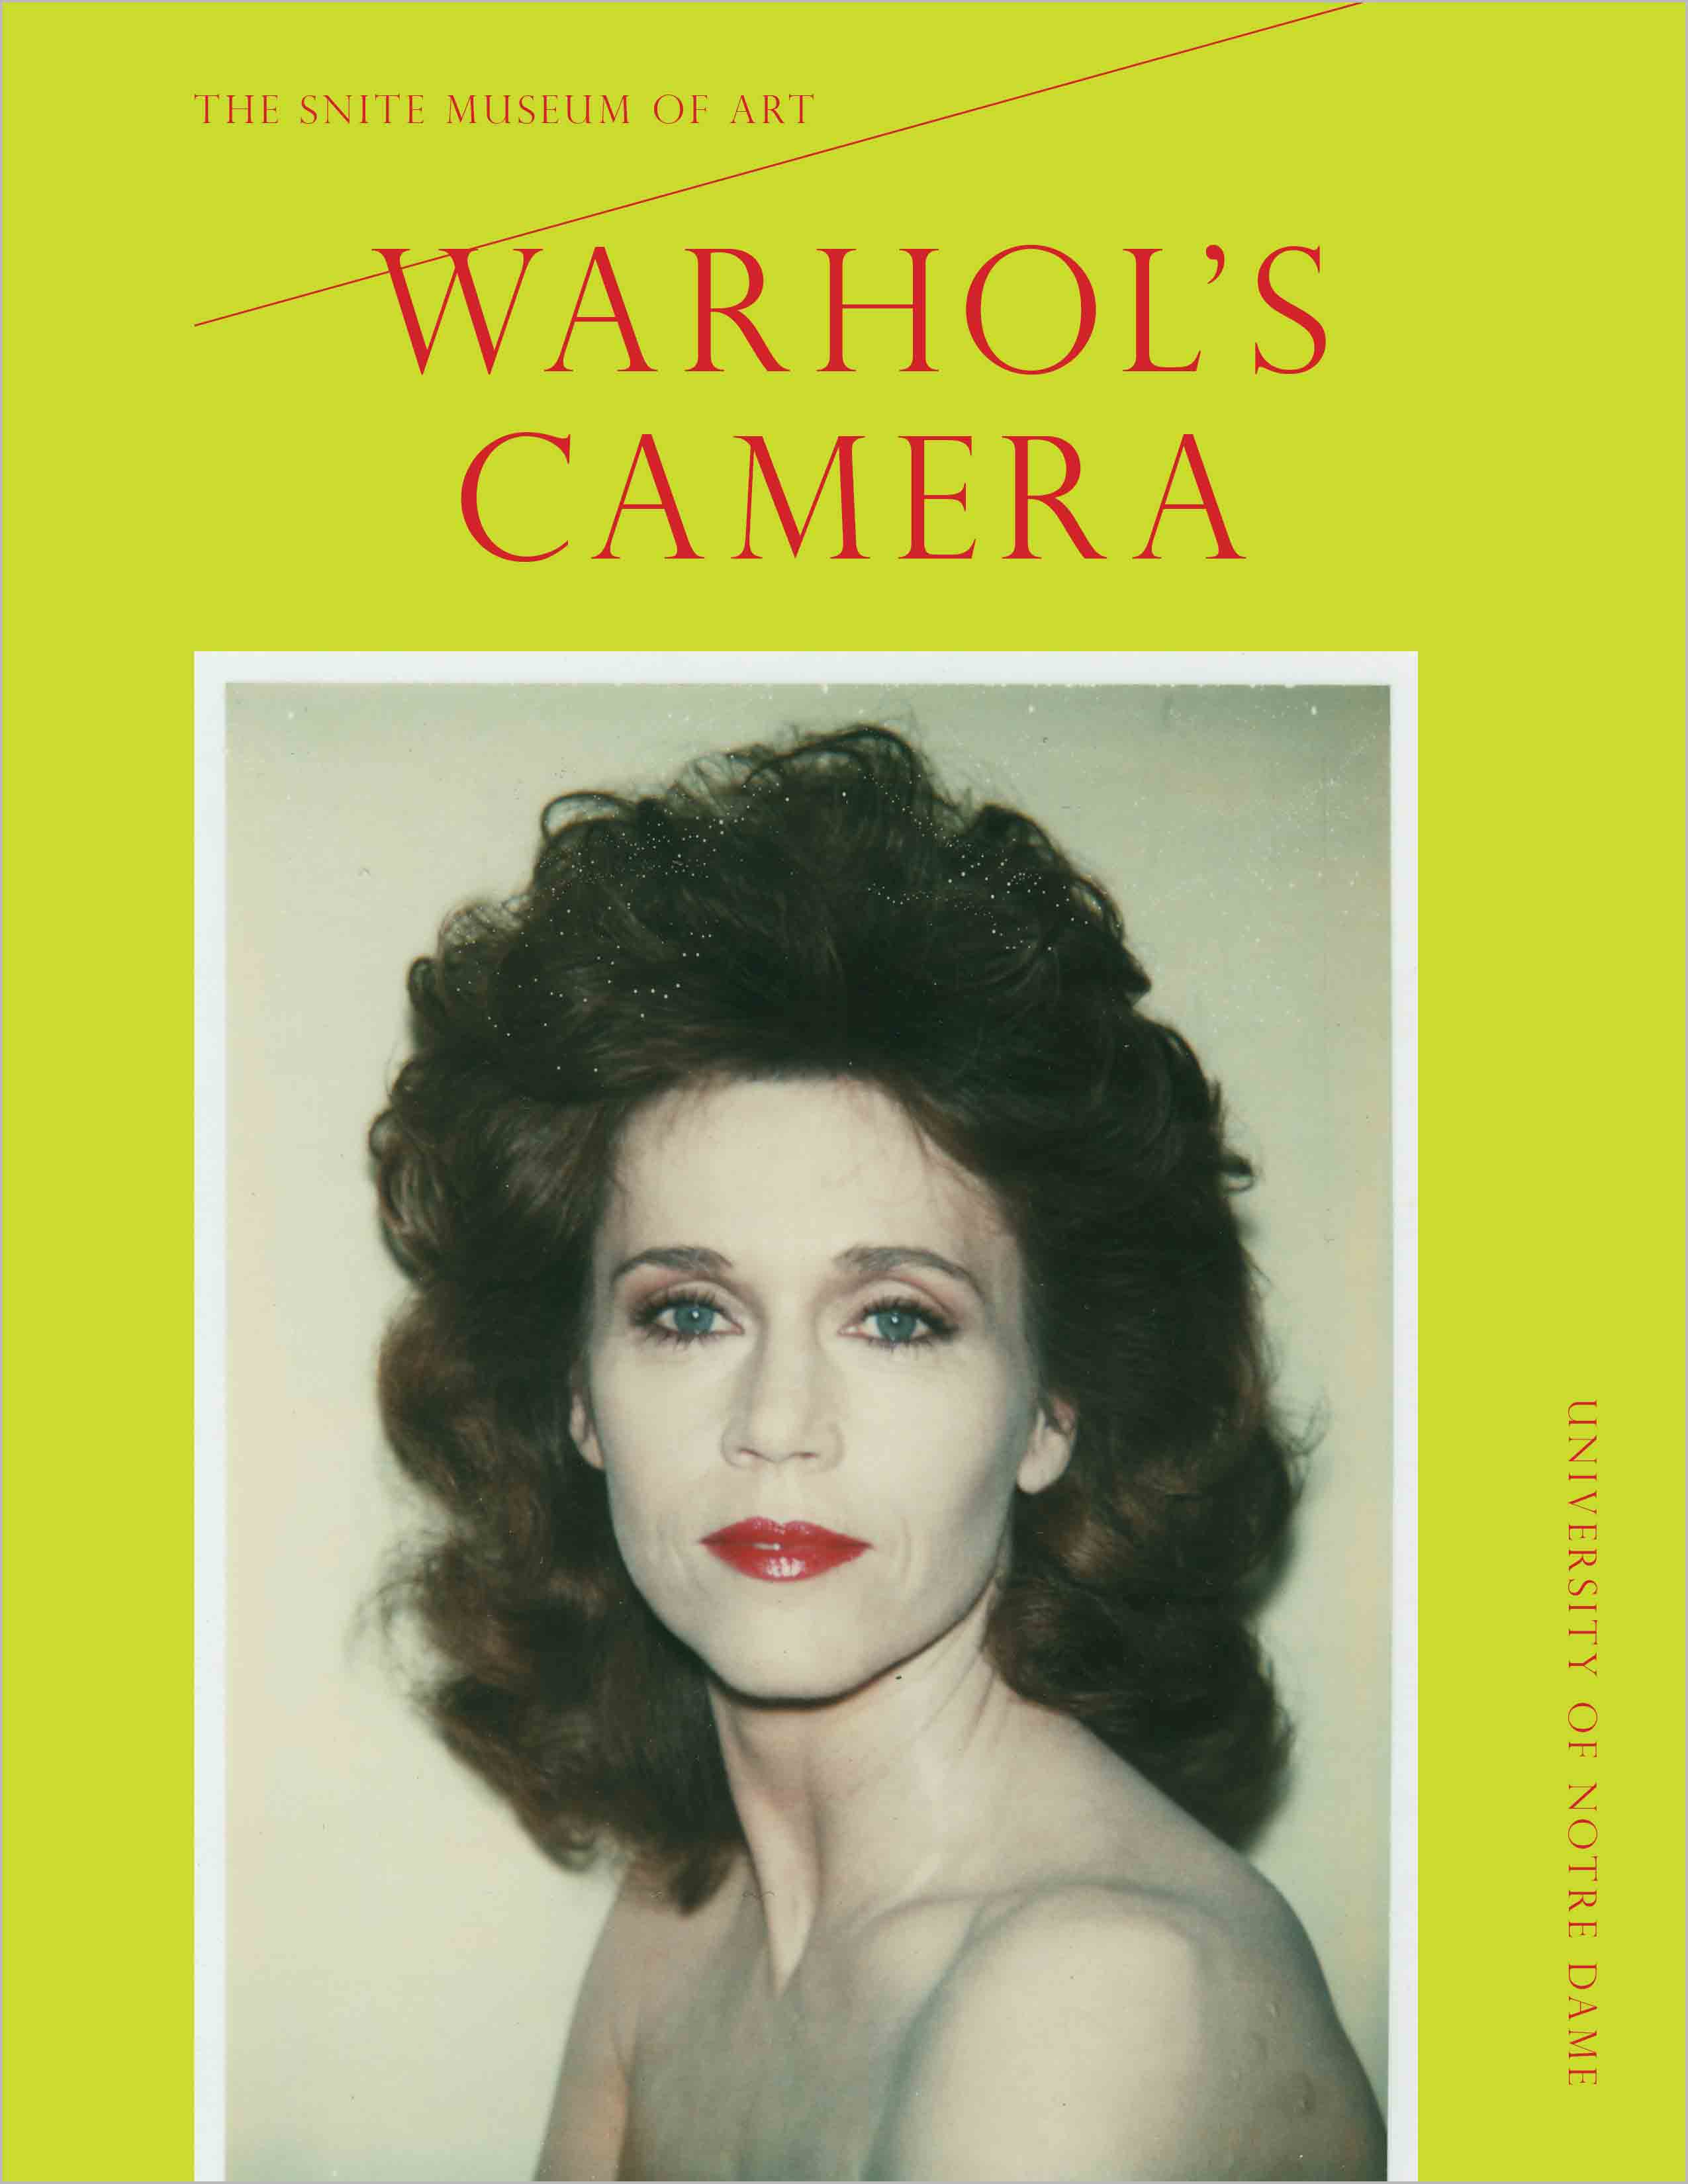 Warhol's Camera